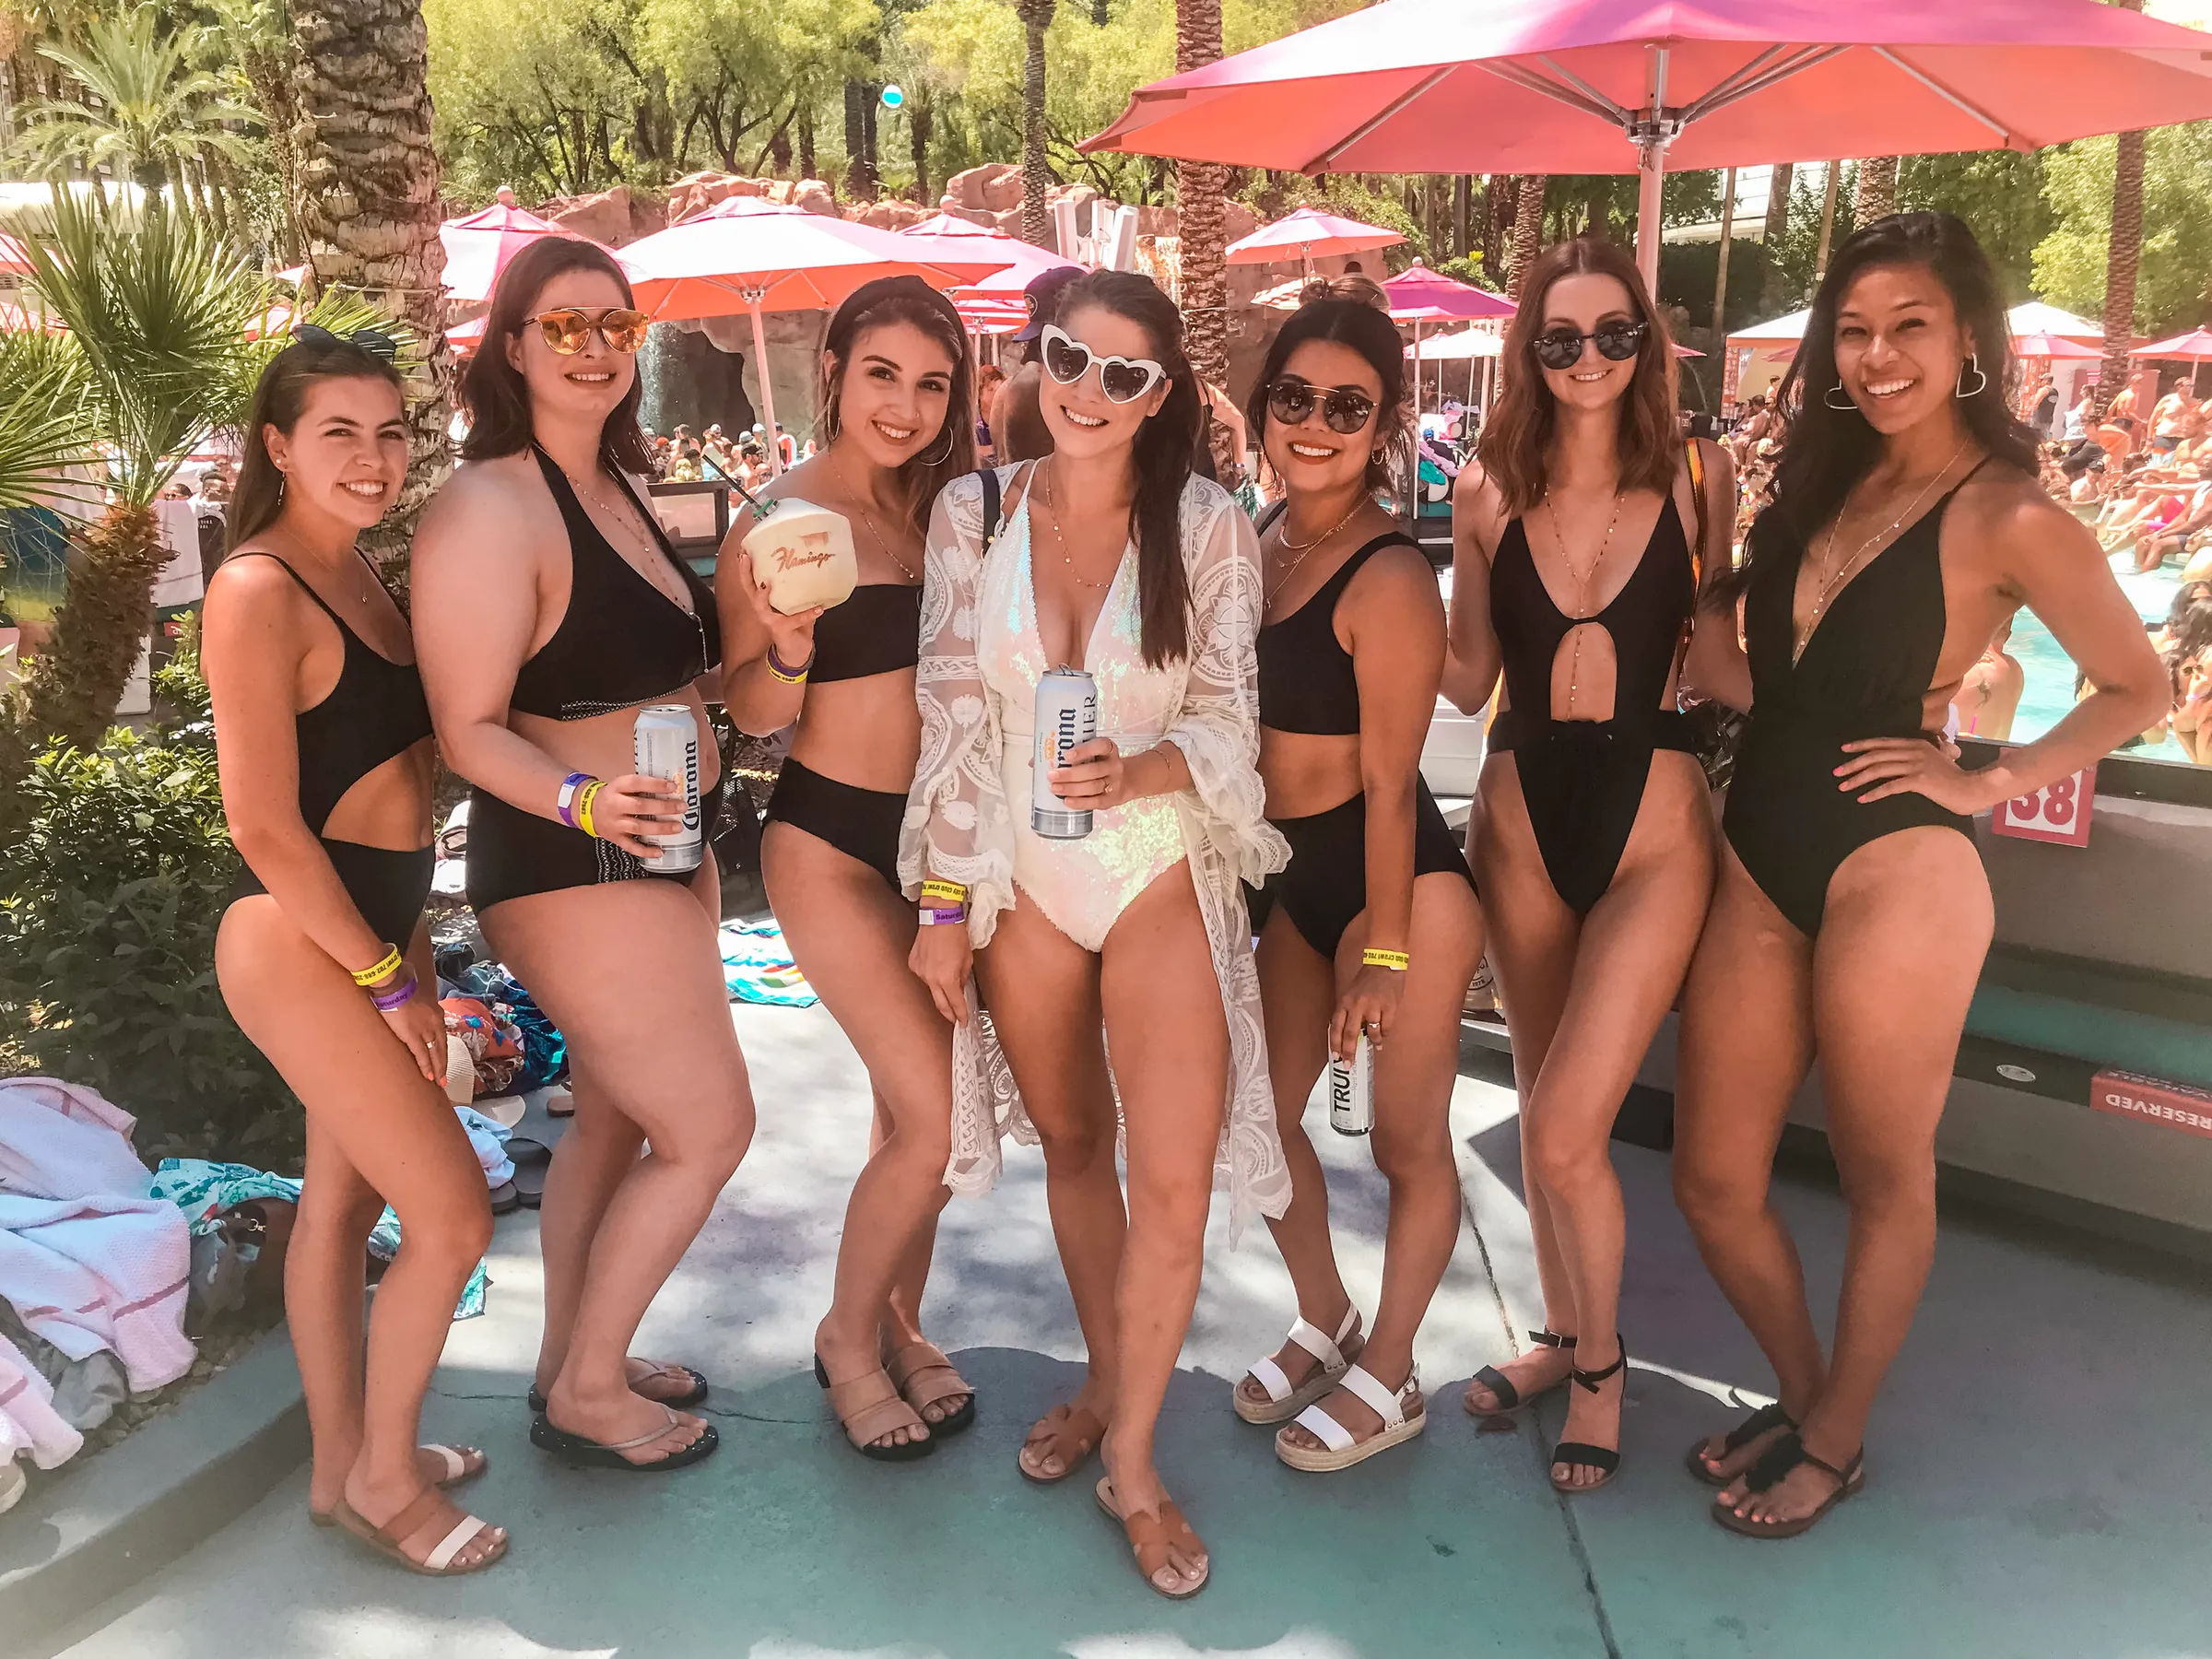 Las Vegas Pool Party Dress Code - What to Wear?